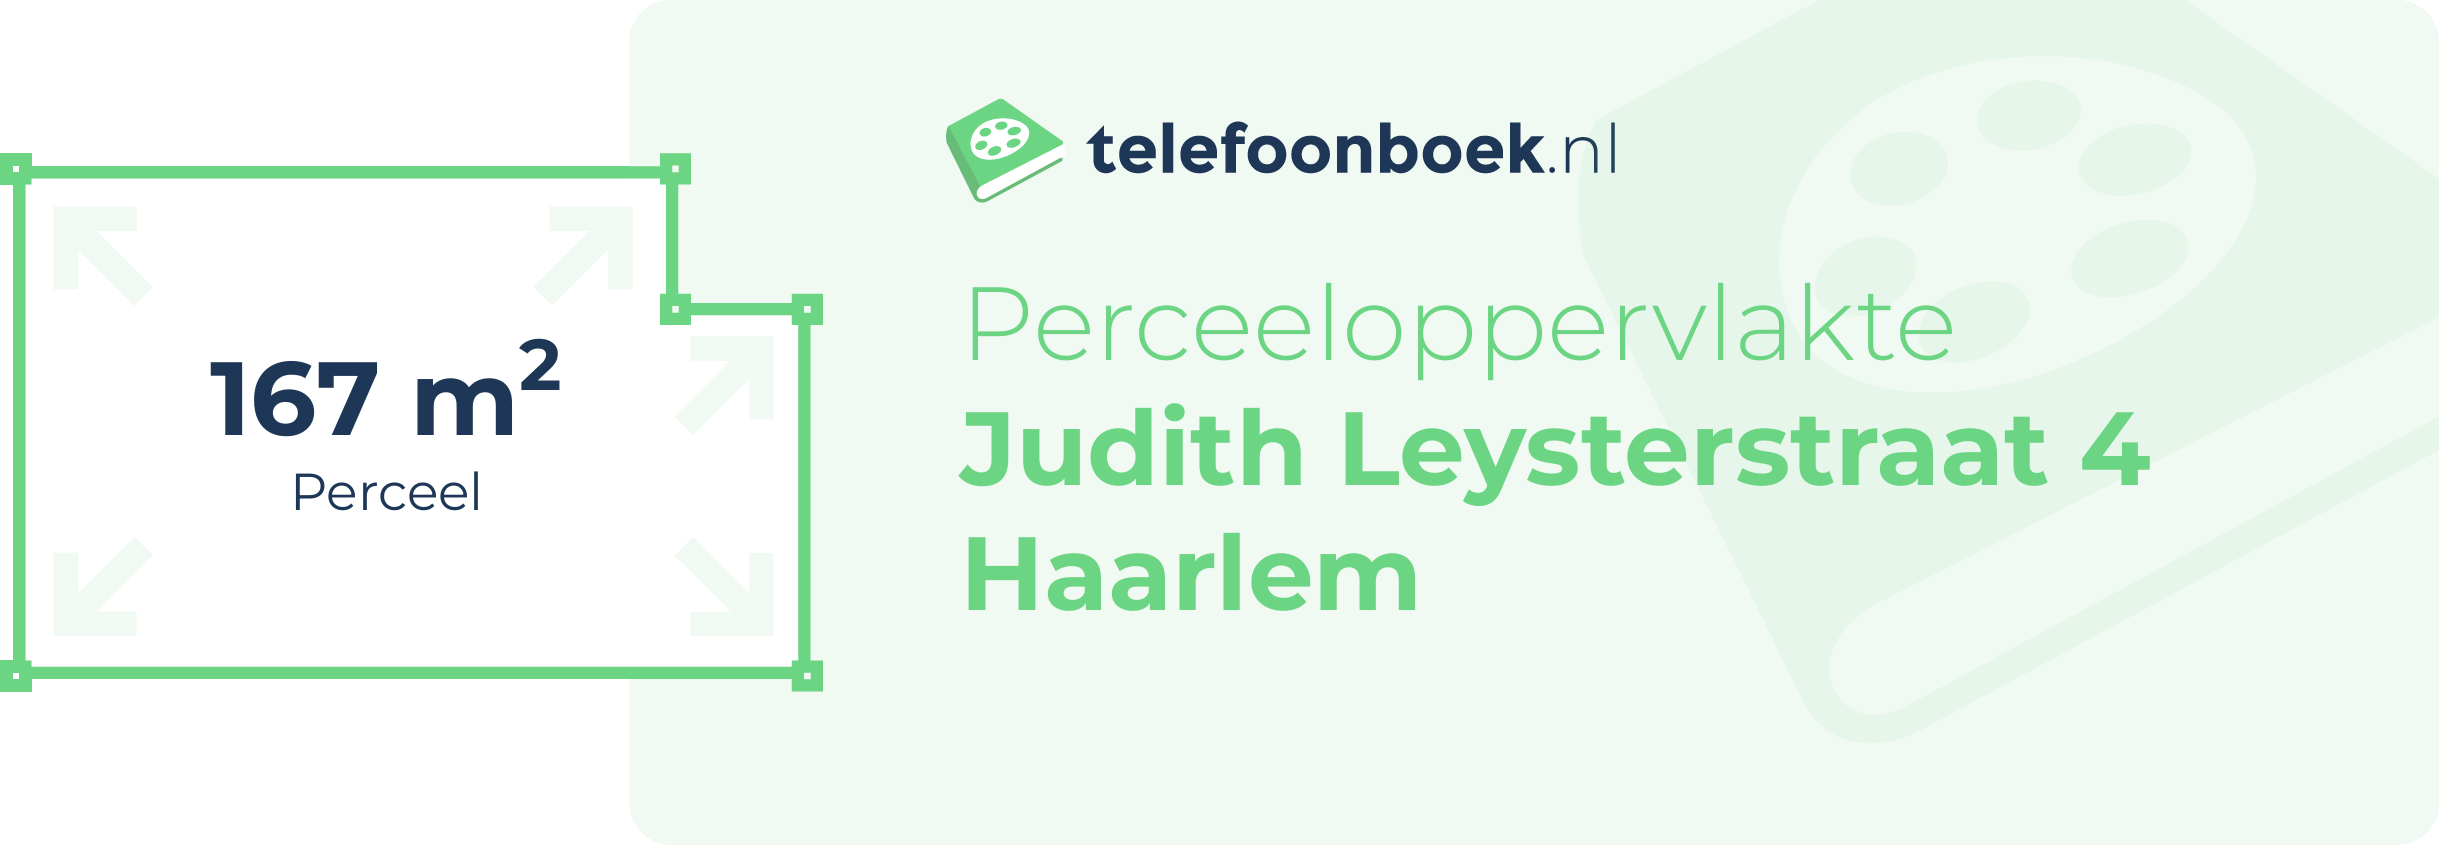 Perceeloppervlakte Judith Leysterstraat 4 Haarlem